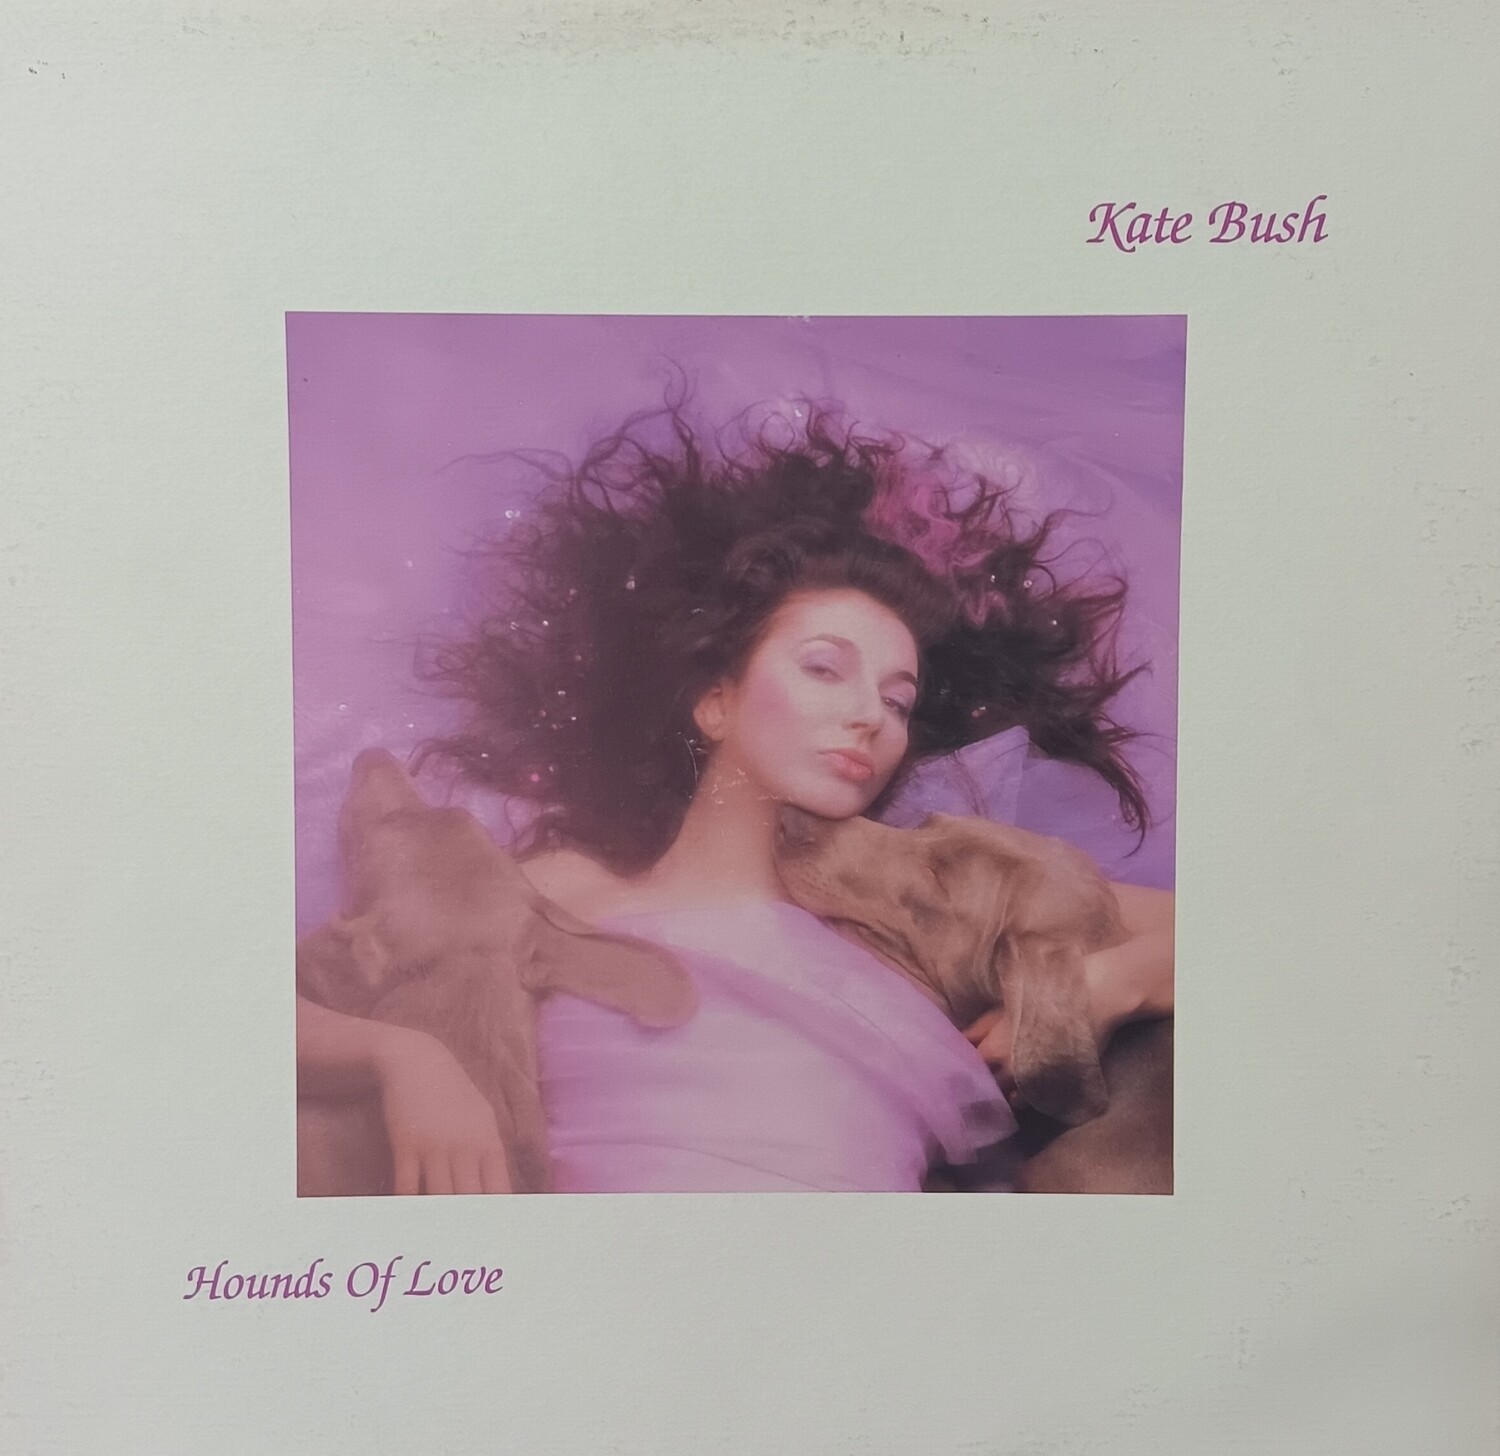 KATE BUSH - Hounds of love